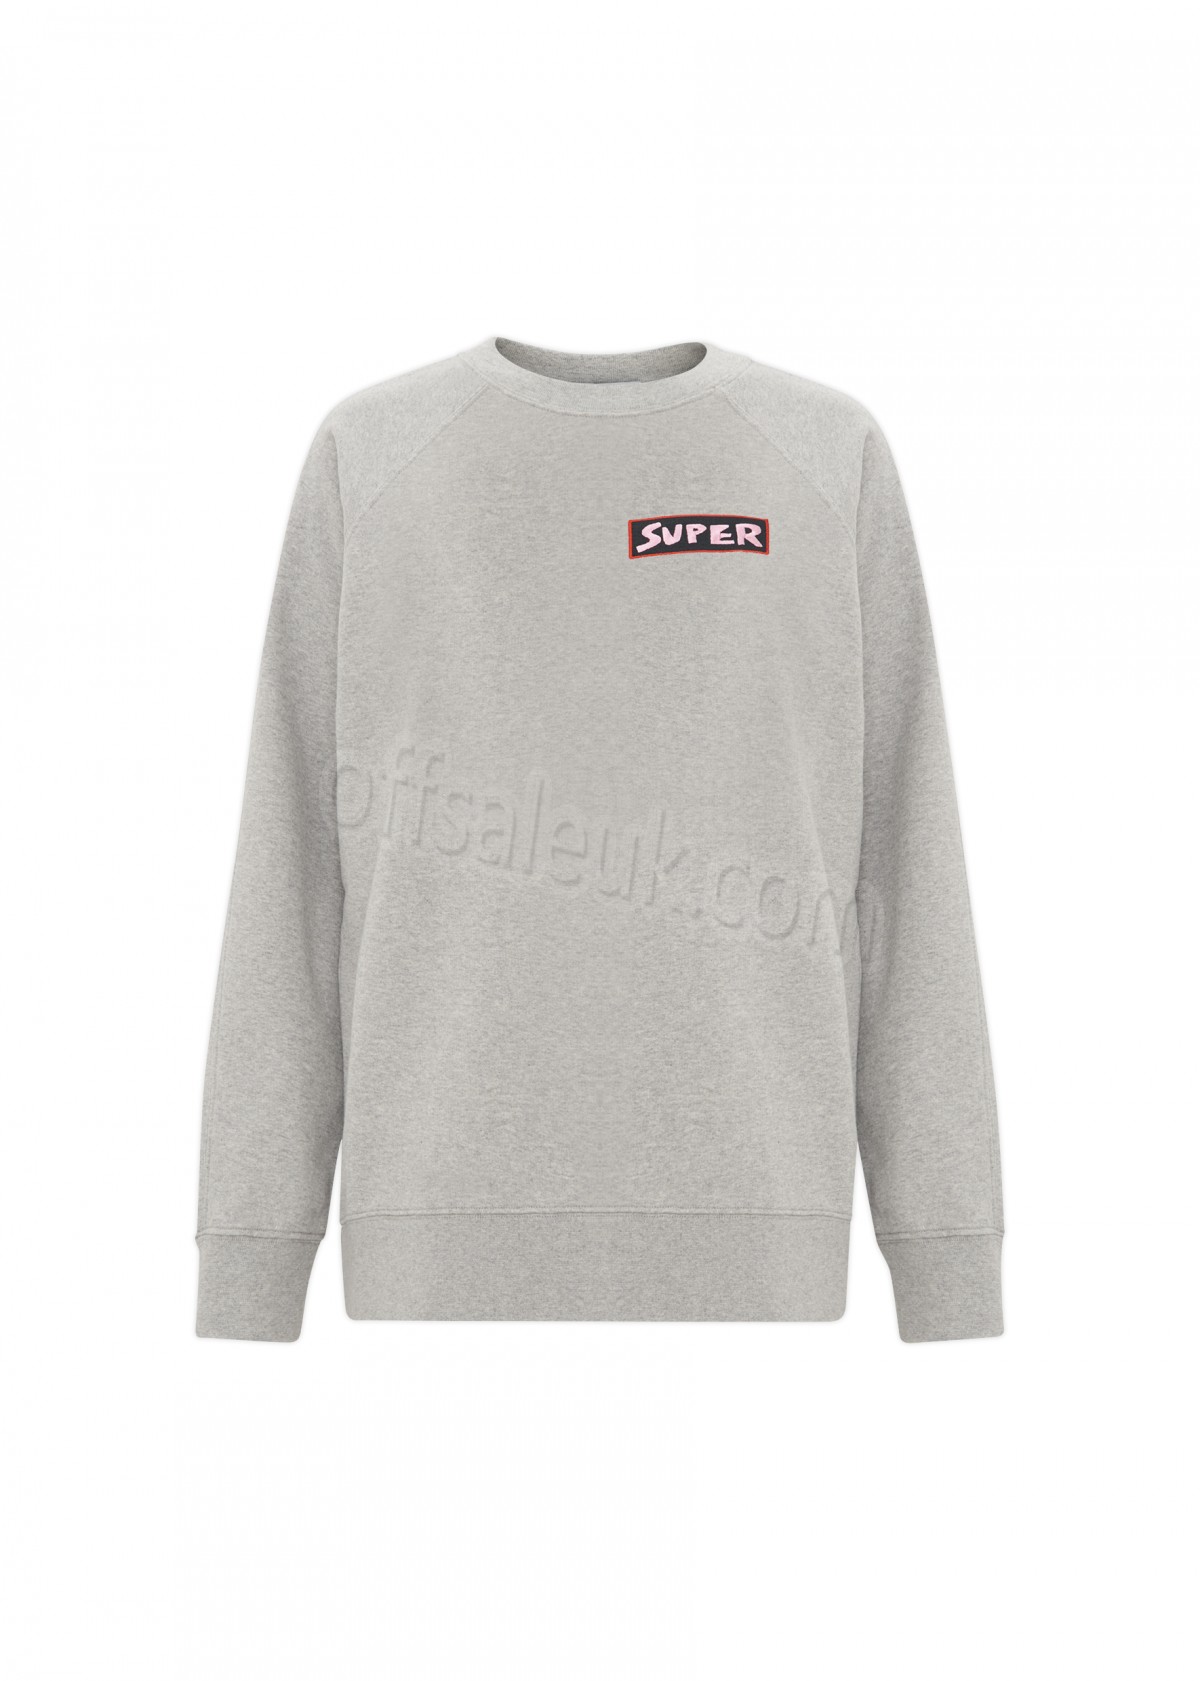 Bella Freud Super Sweatshirt - -0